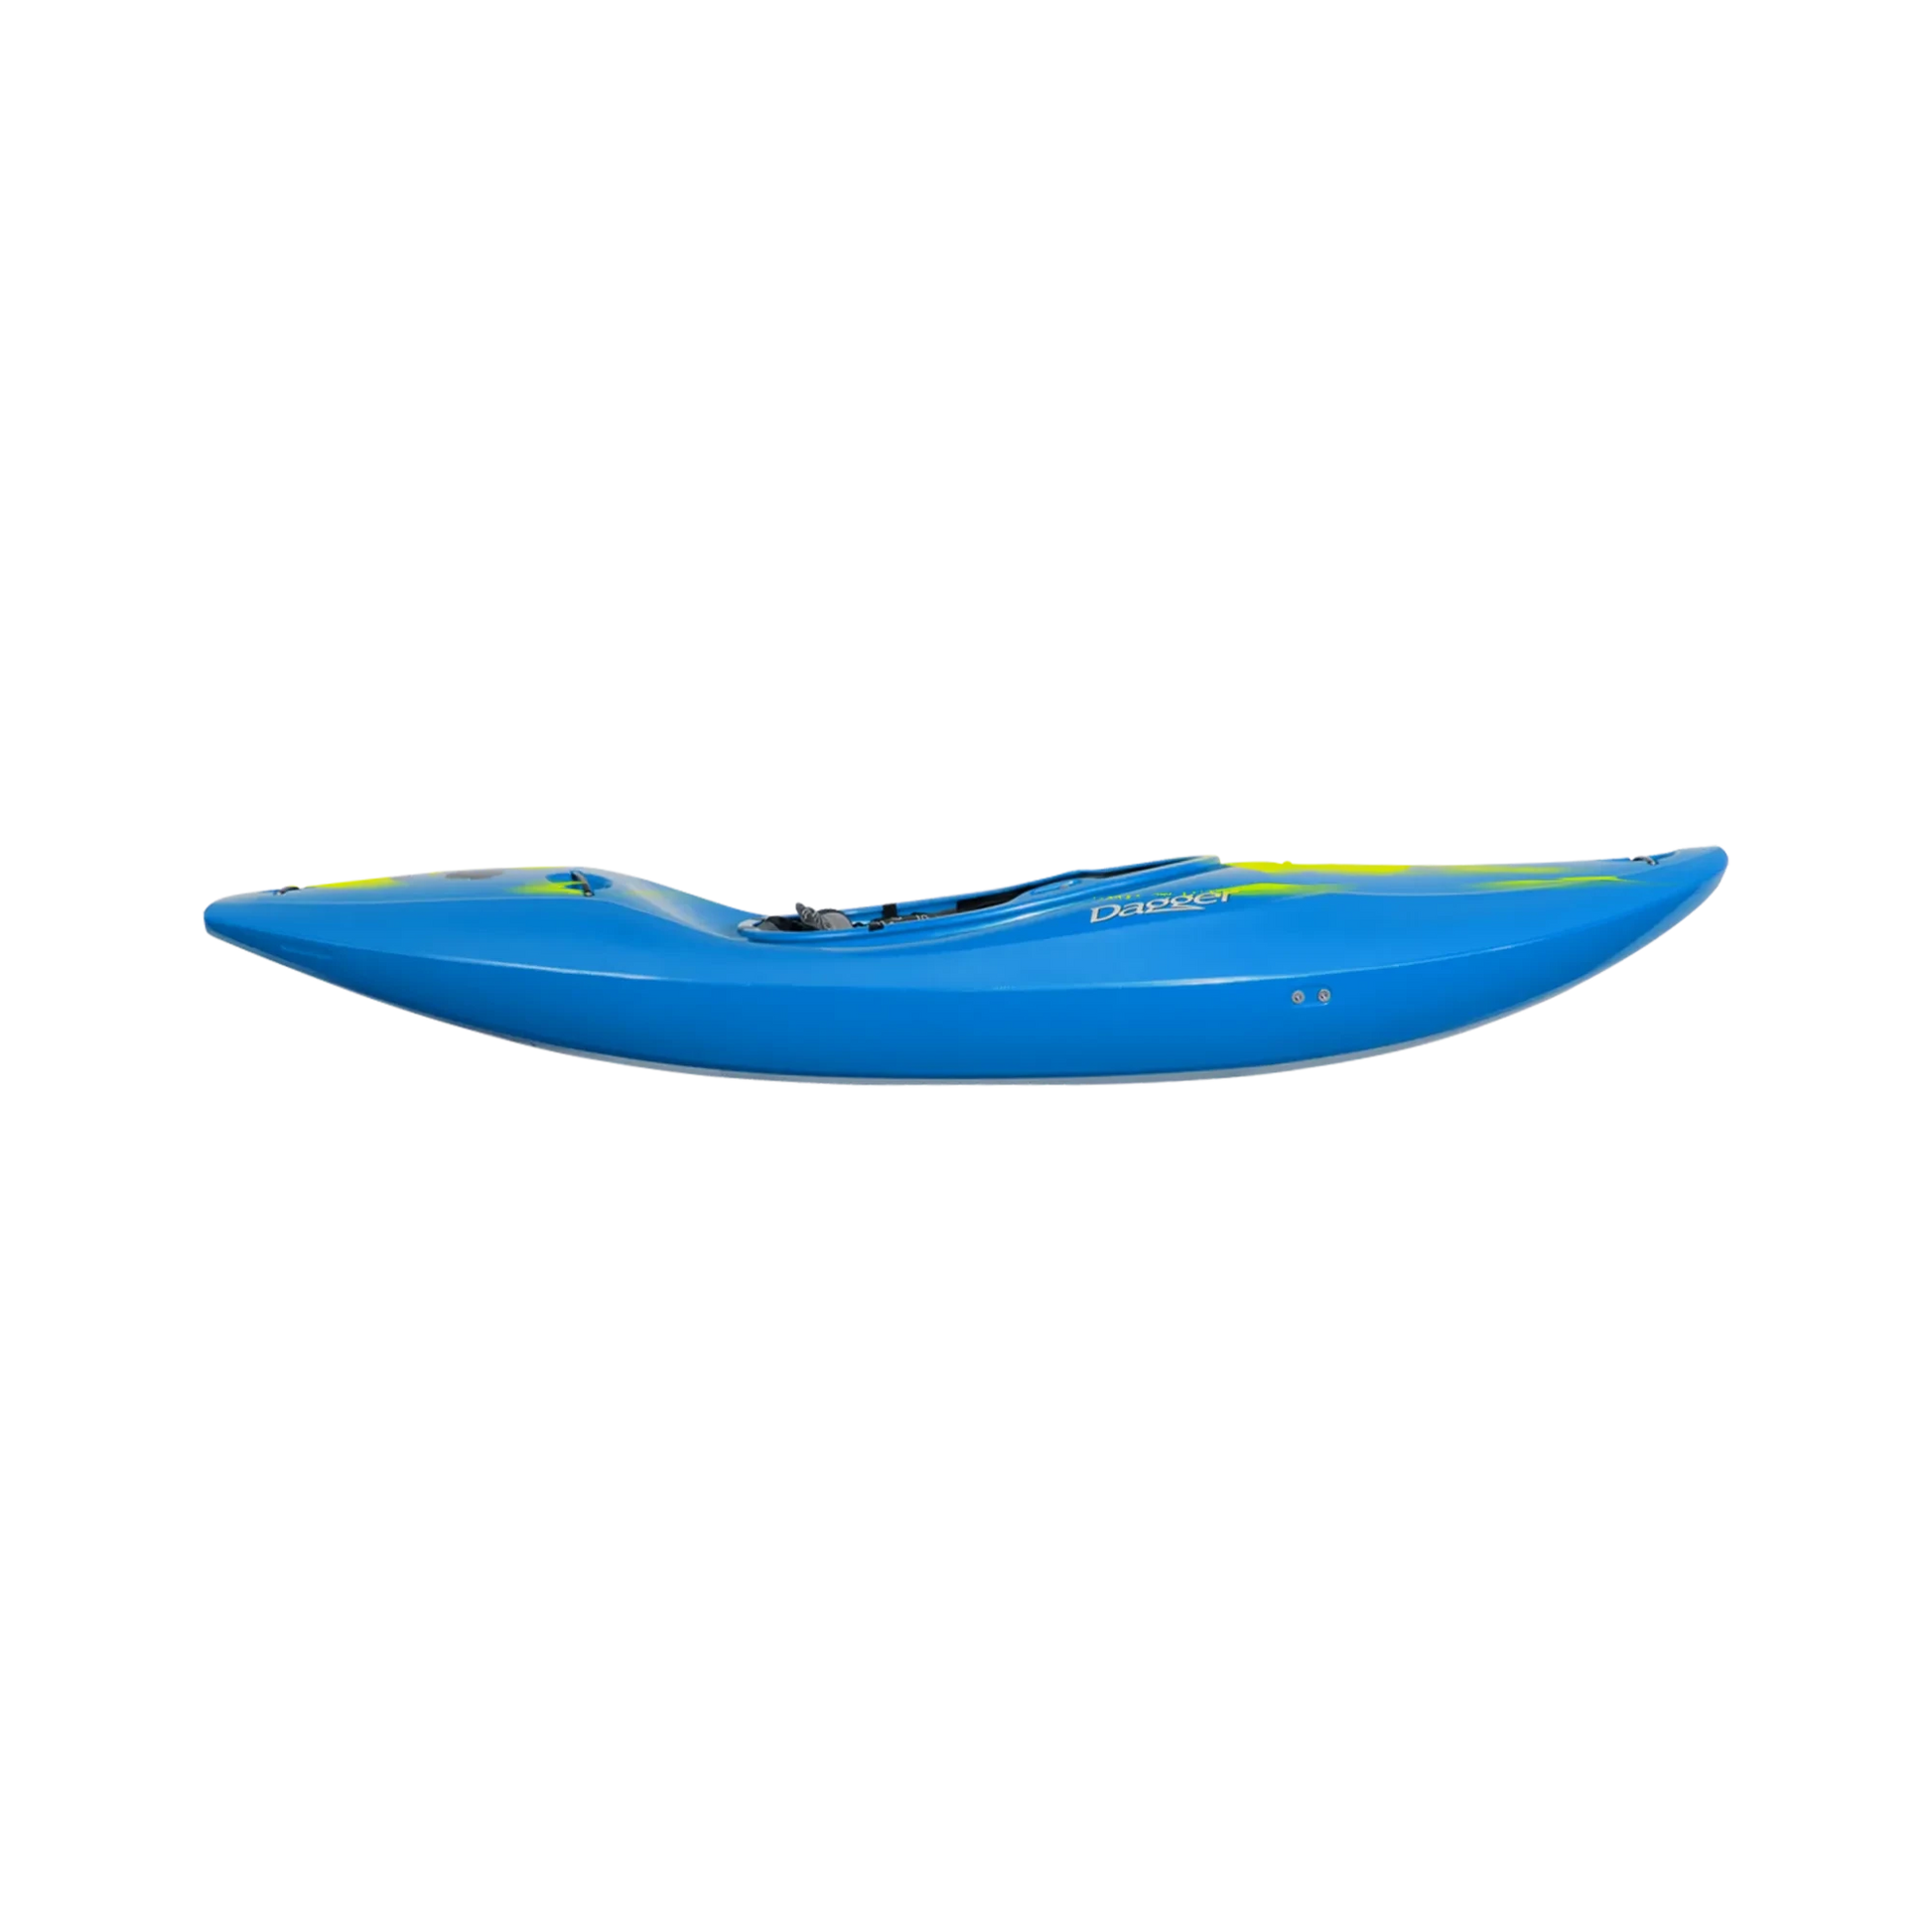 A blue and green Phantom kayak on a black background, Dagger.